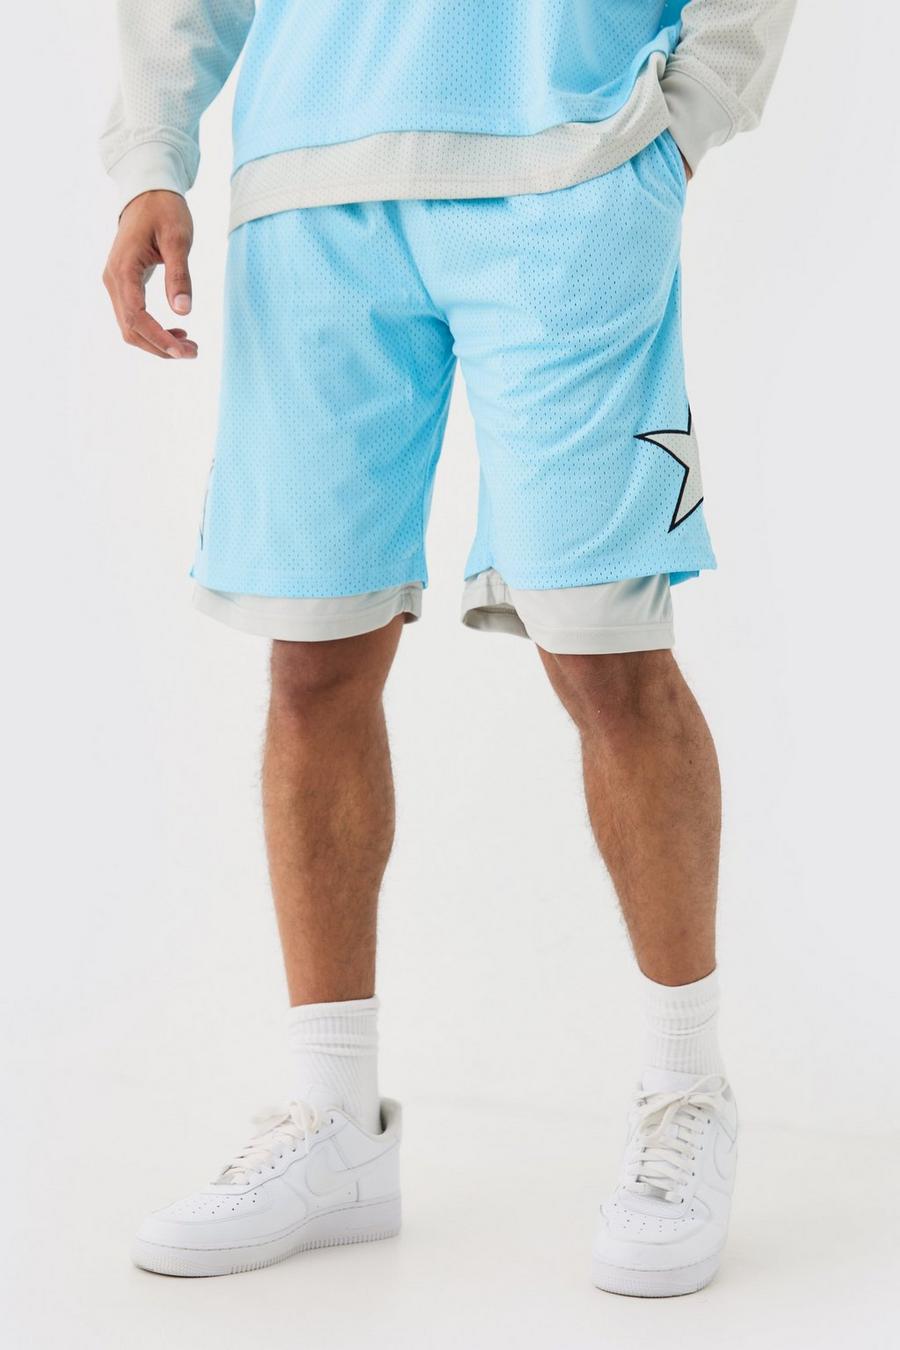 Pantalón corto holgado largo de malla a capas estilo baloncesto, Blue image number 1